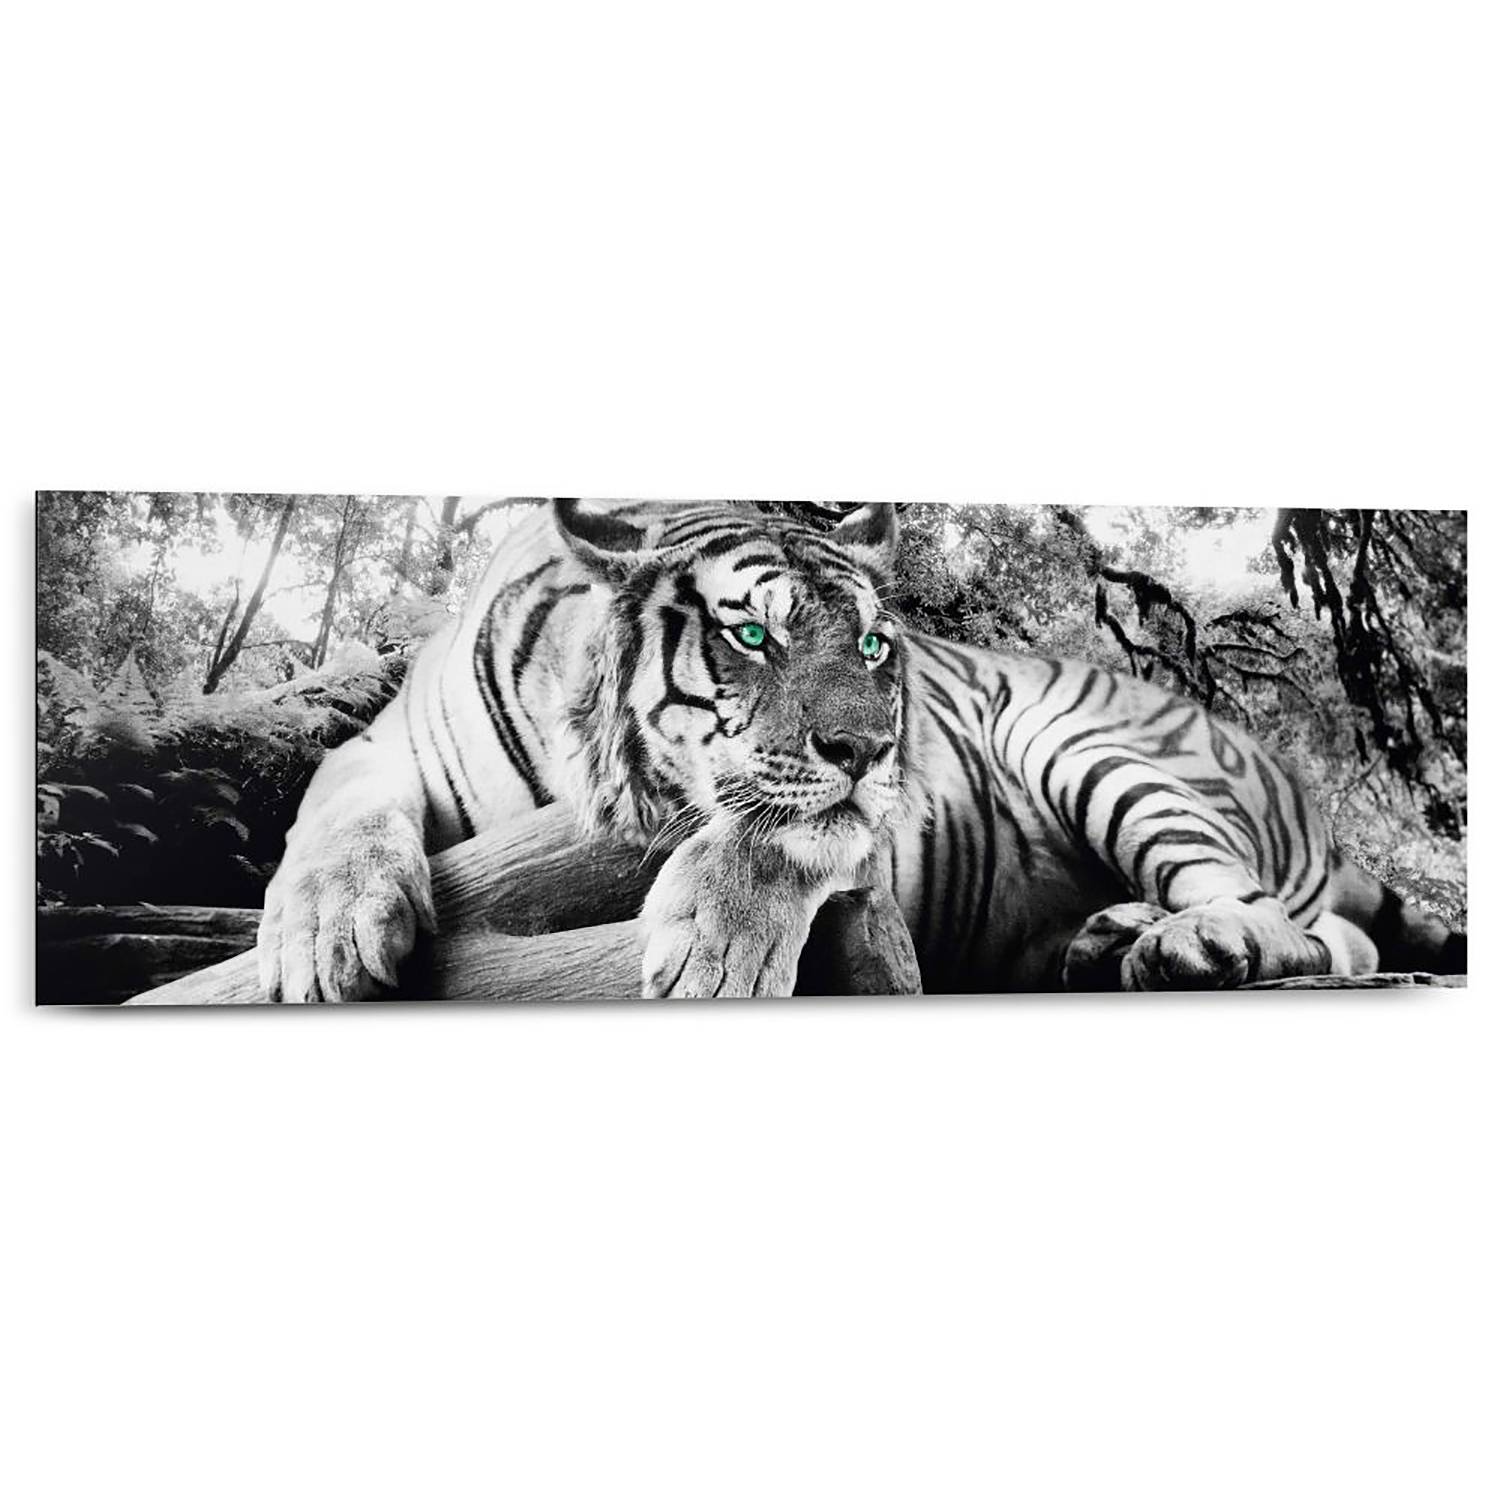 Wandbild Tigerblick kaufen | home24